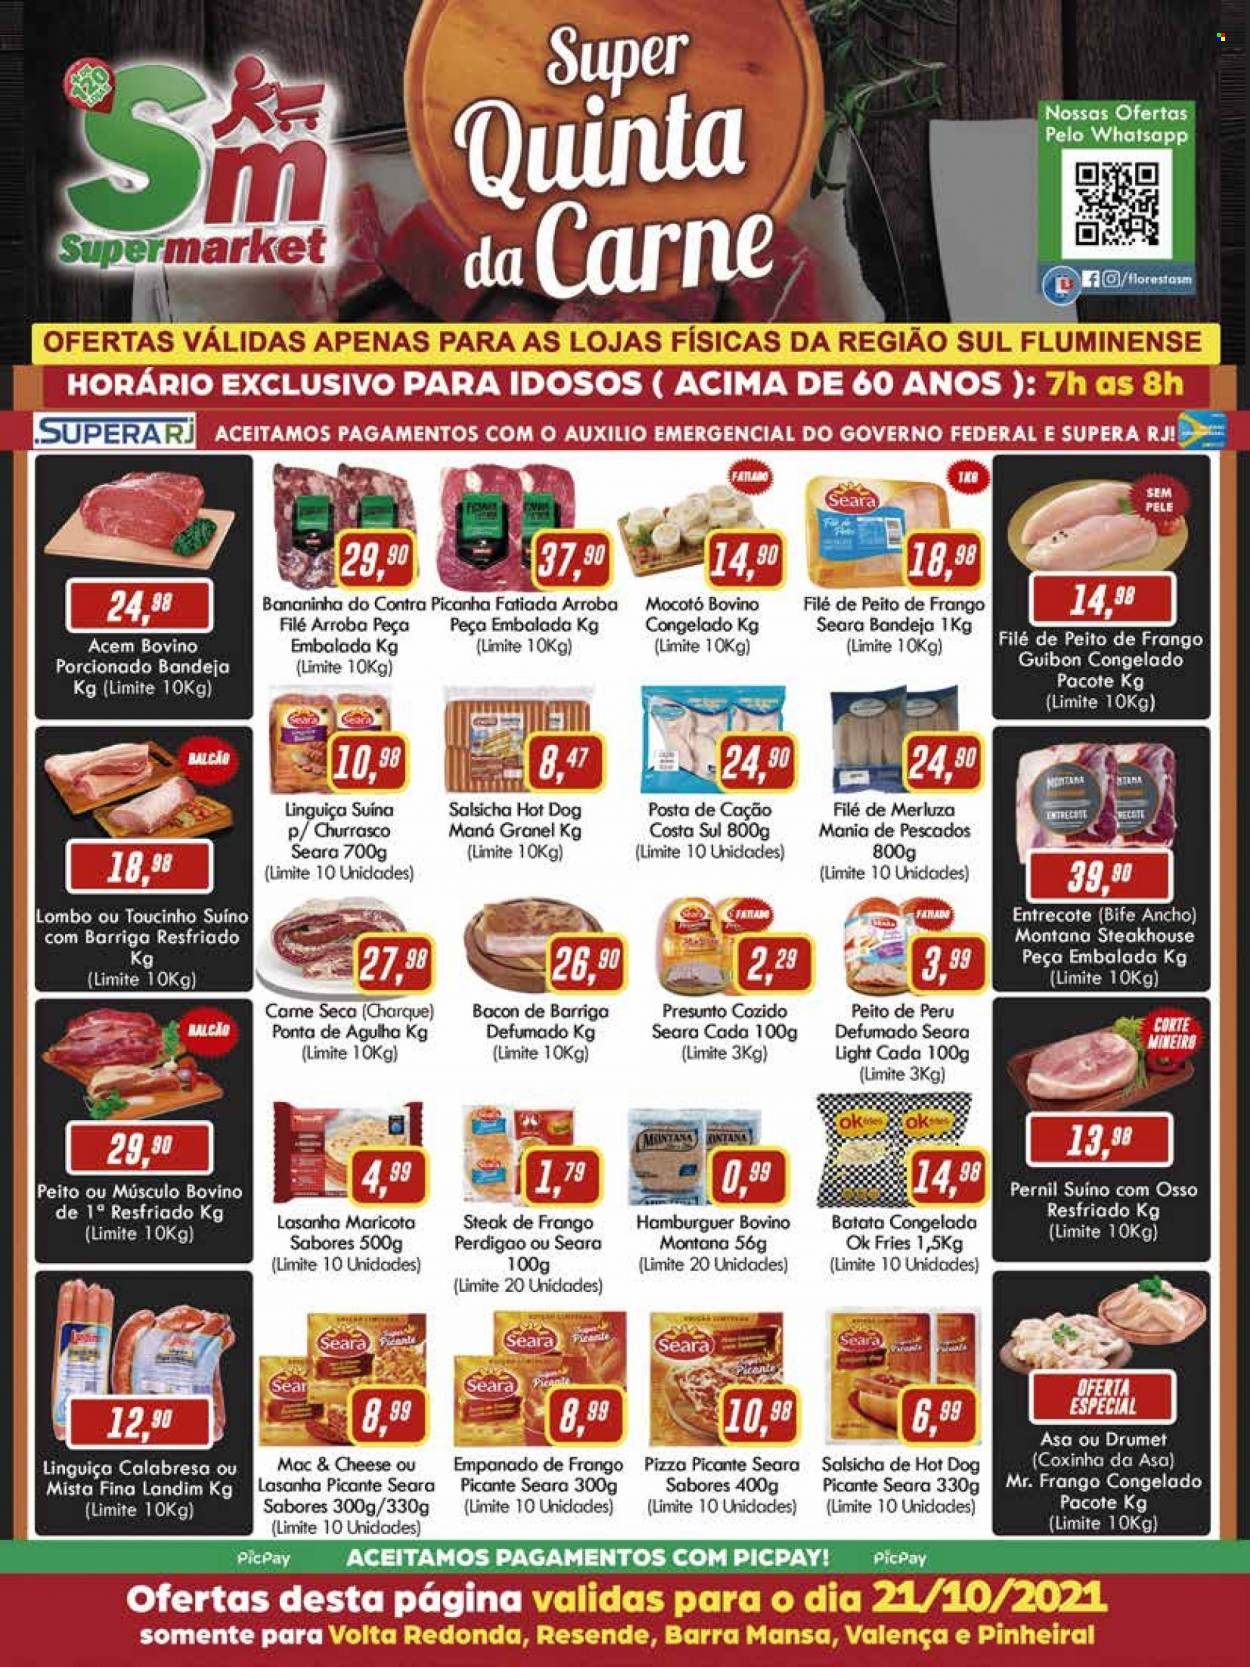 Encarte Rede Supermarket  - 21.10.2021 - 21.10.2021.